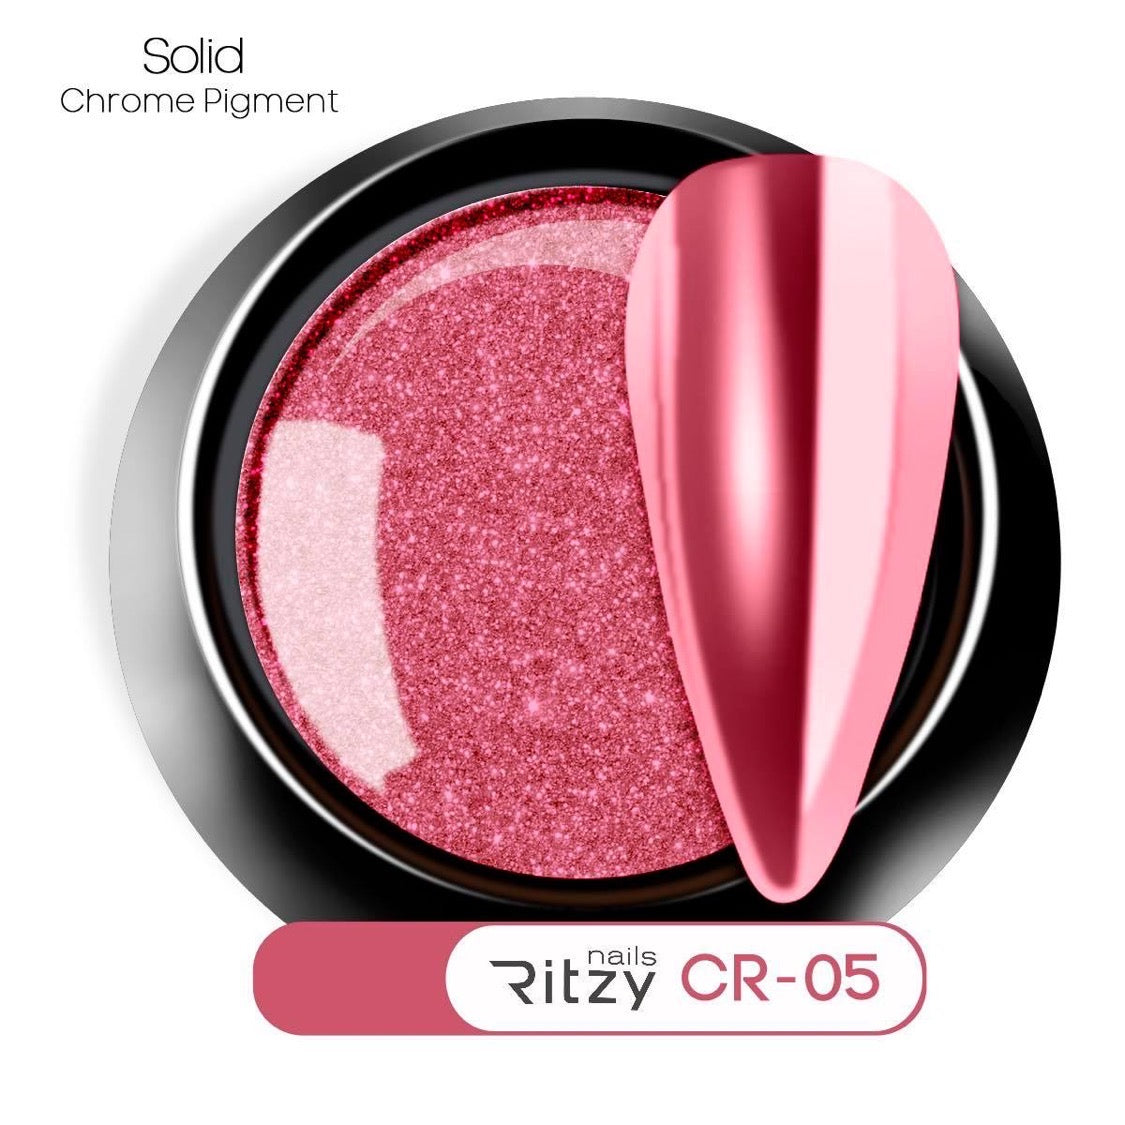 Chrome pigment CR-05